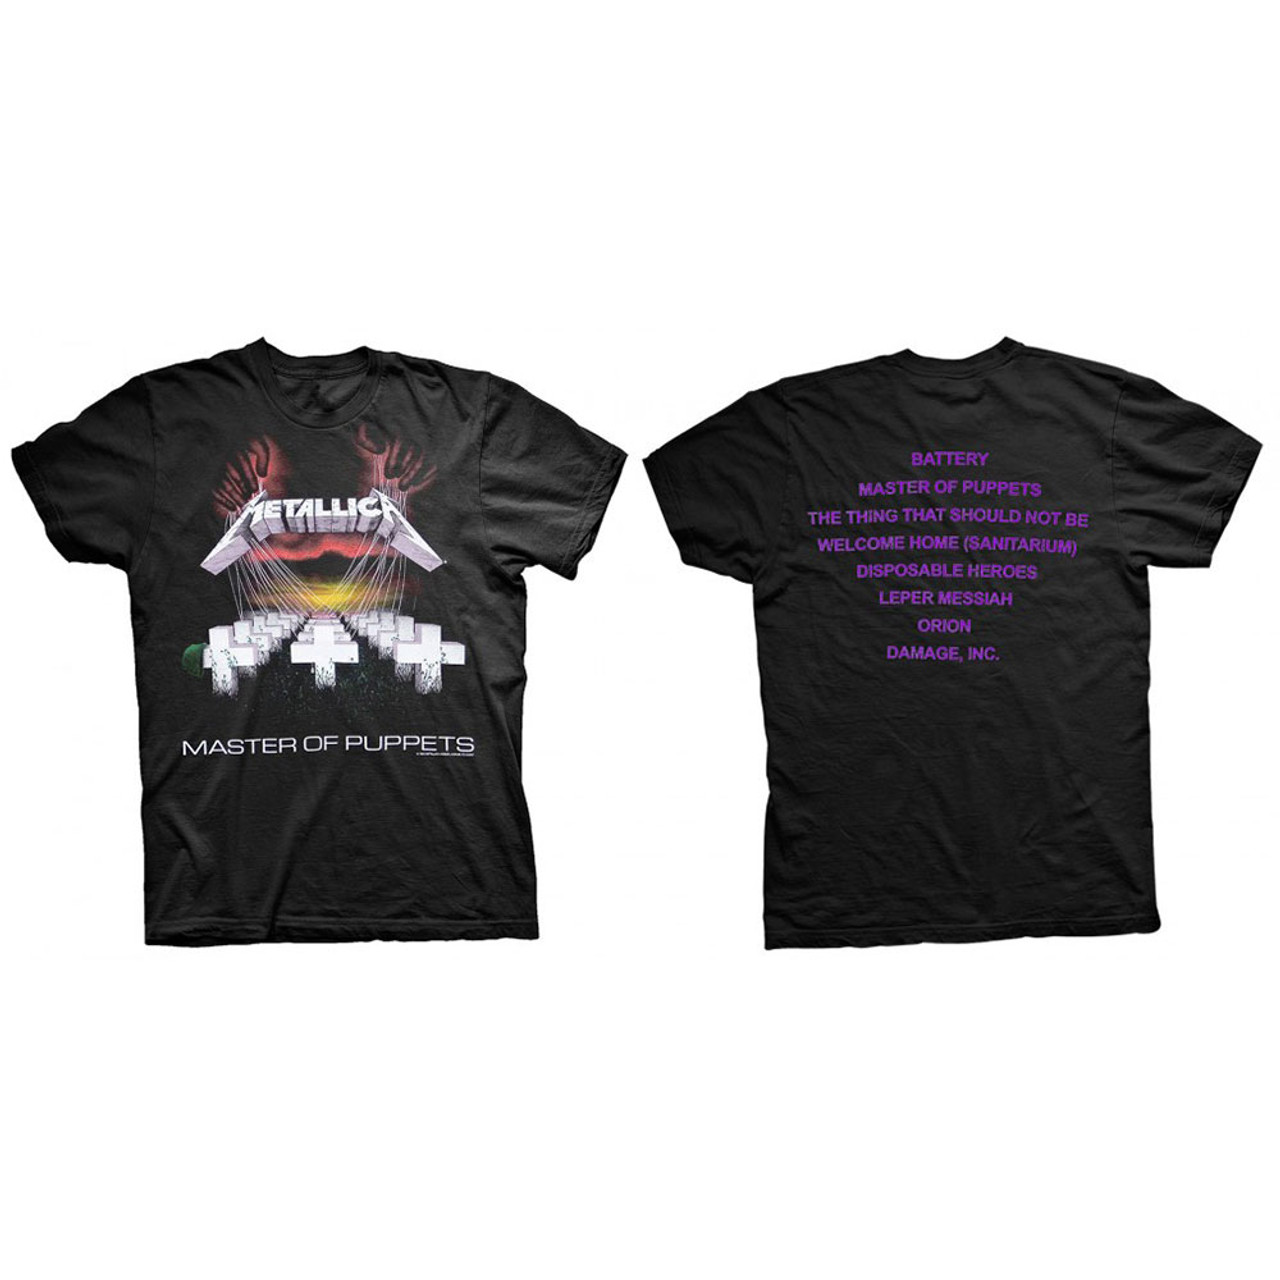 Vintage Metallica tour T-shirt  Tour t shirts, Giants shirt, Shirts